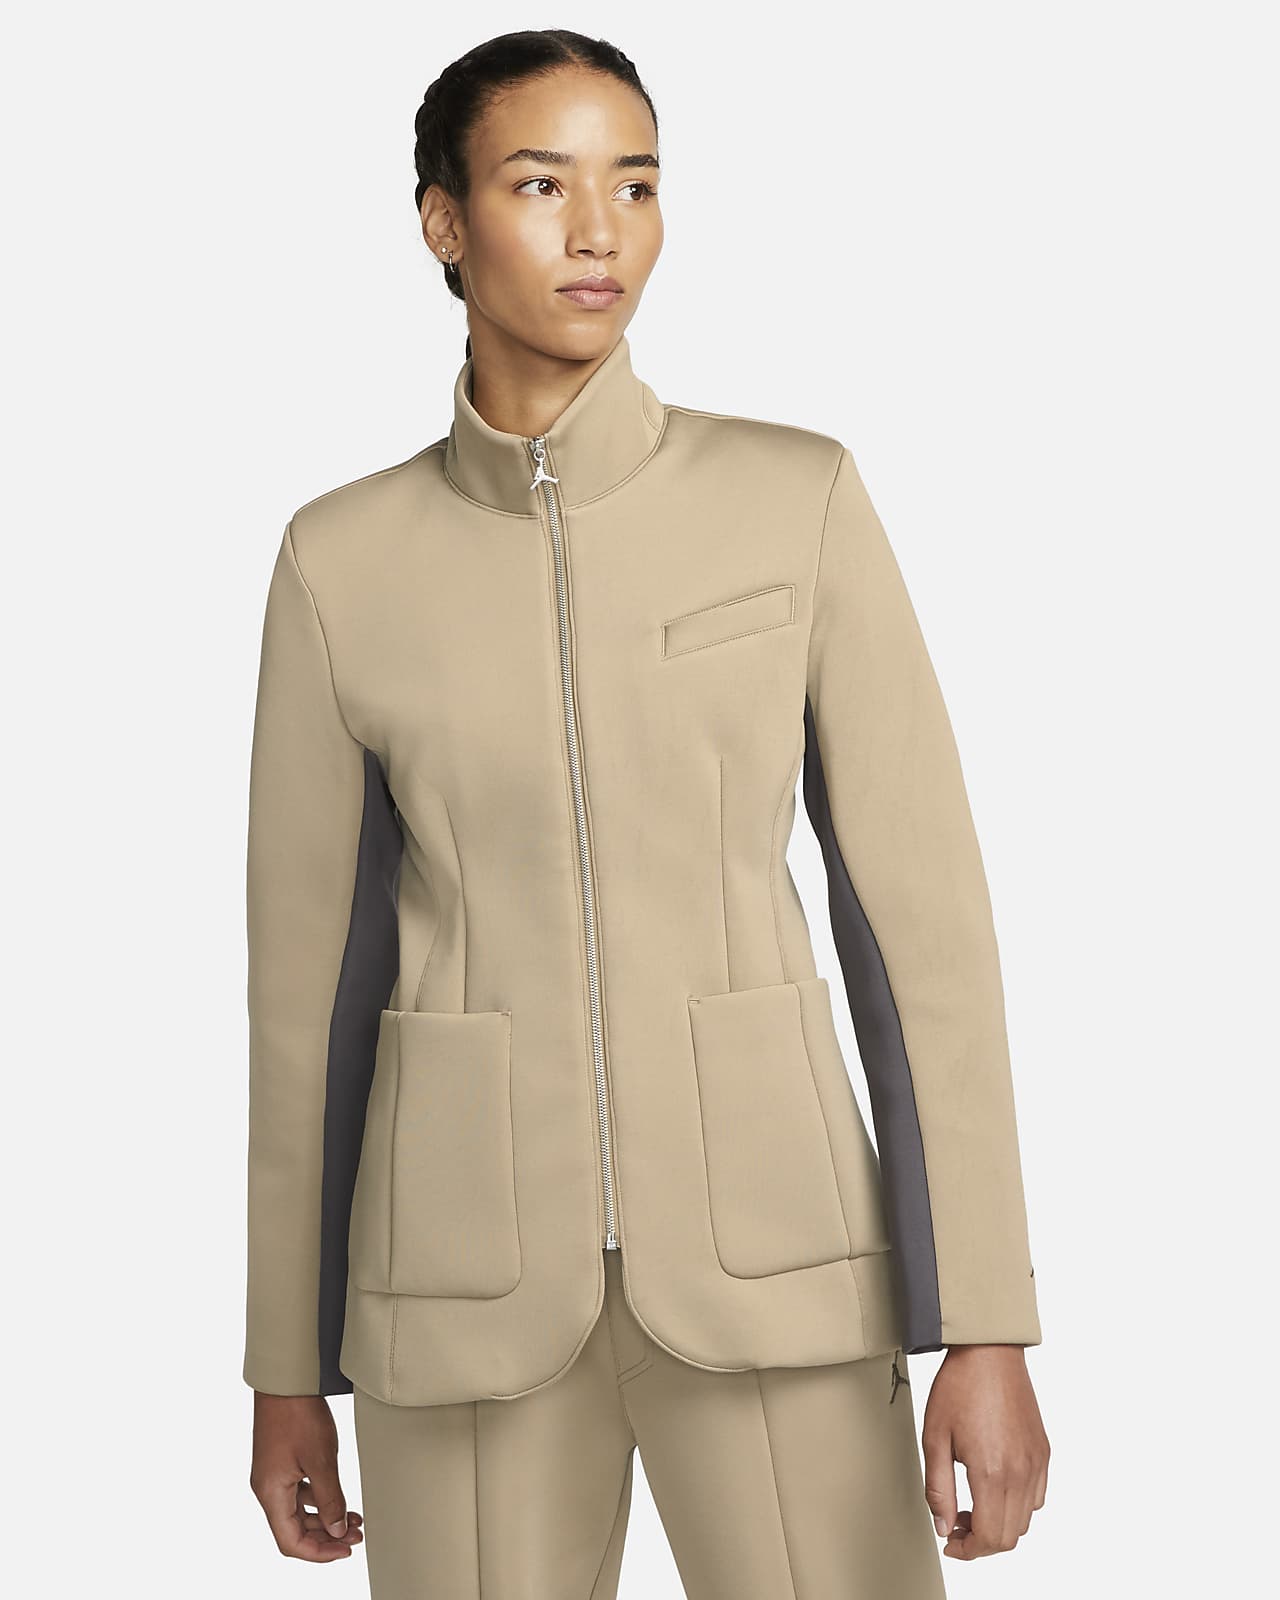 Jordan New Classics Capsule Women's Suit Jacket